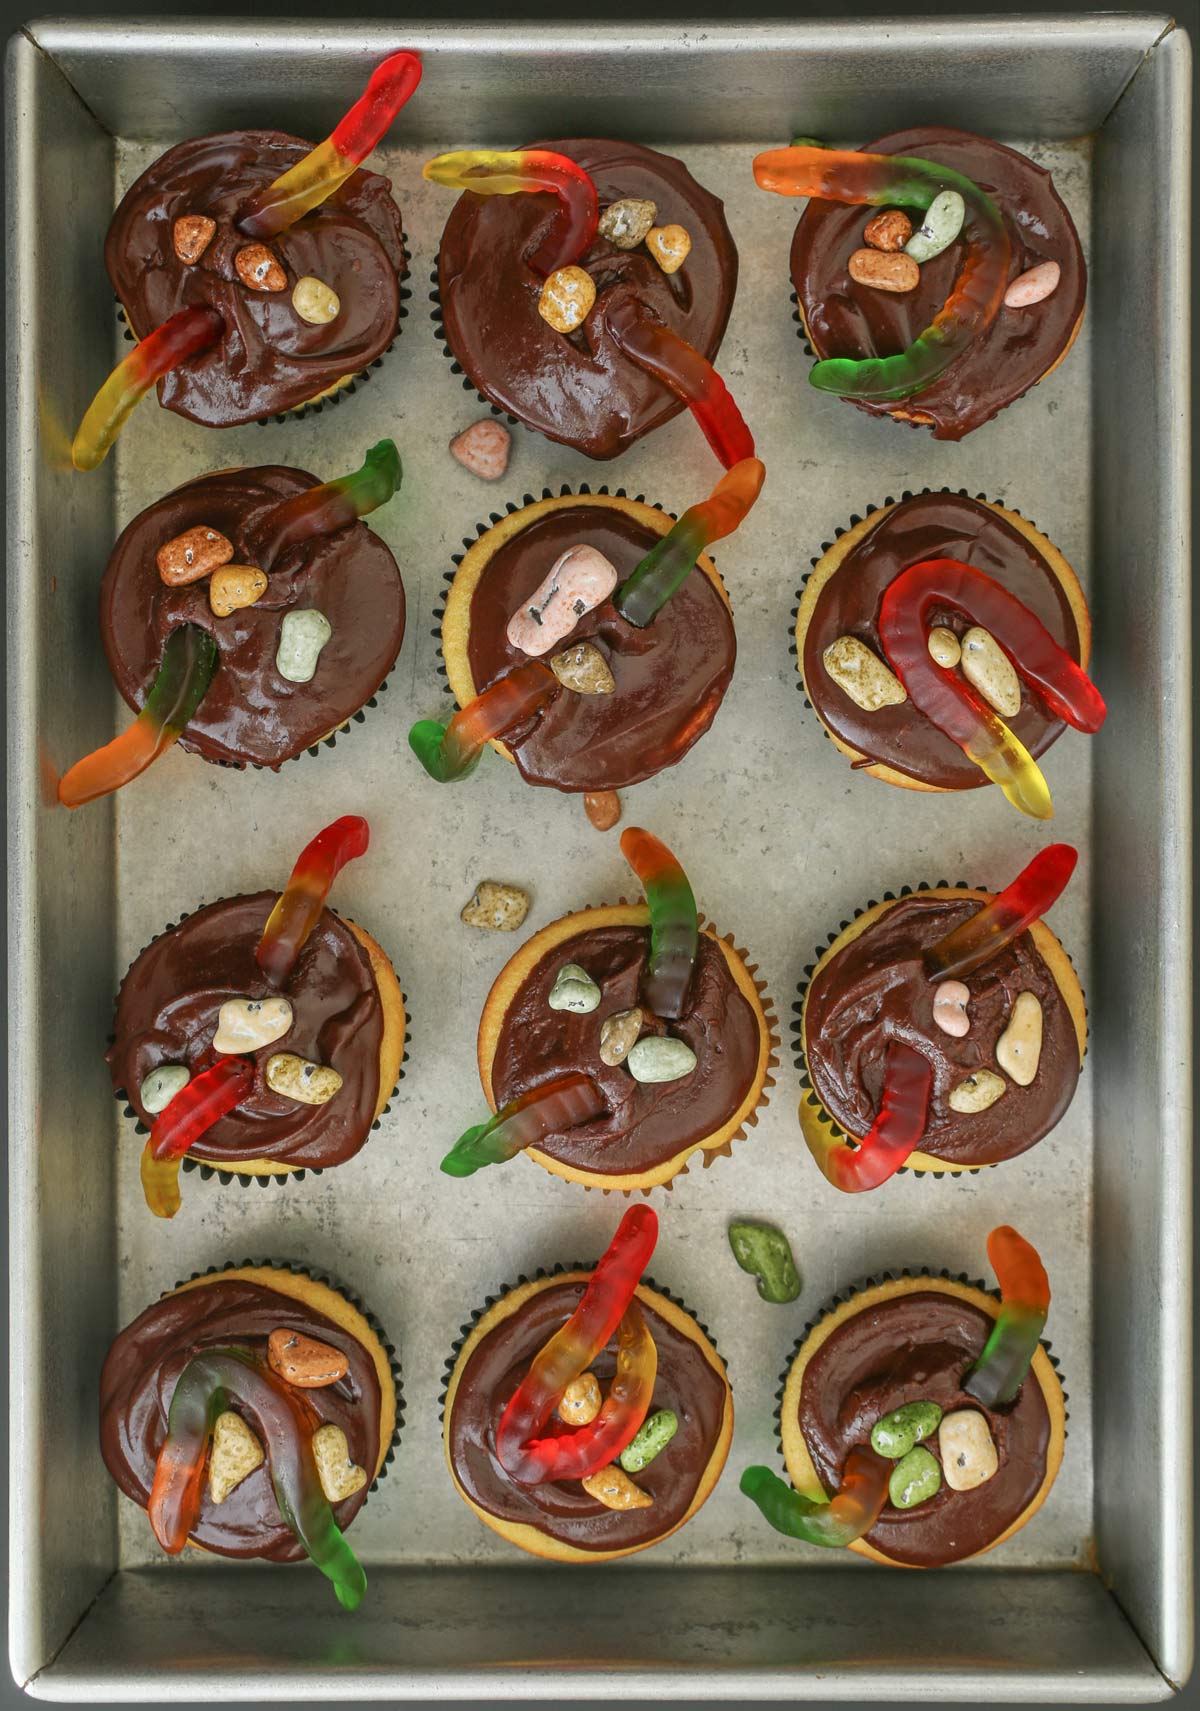 chocolate rocks added to cupcakes.